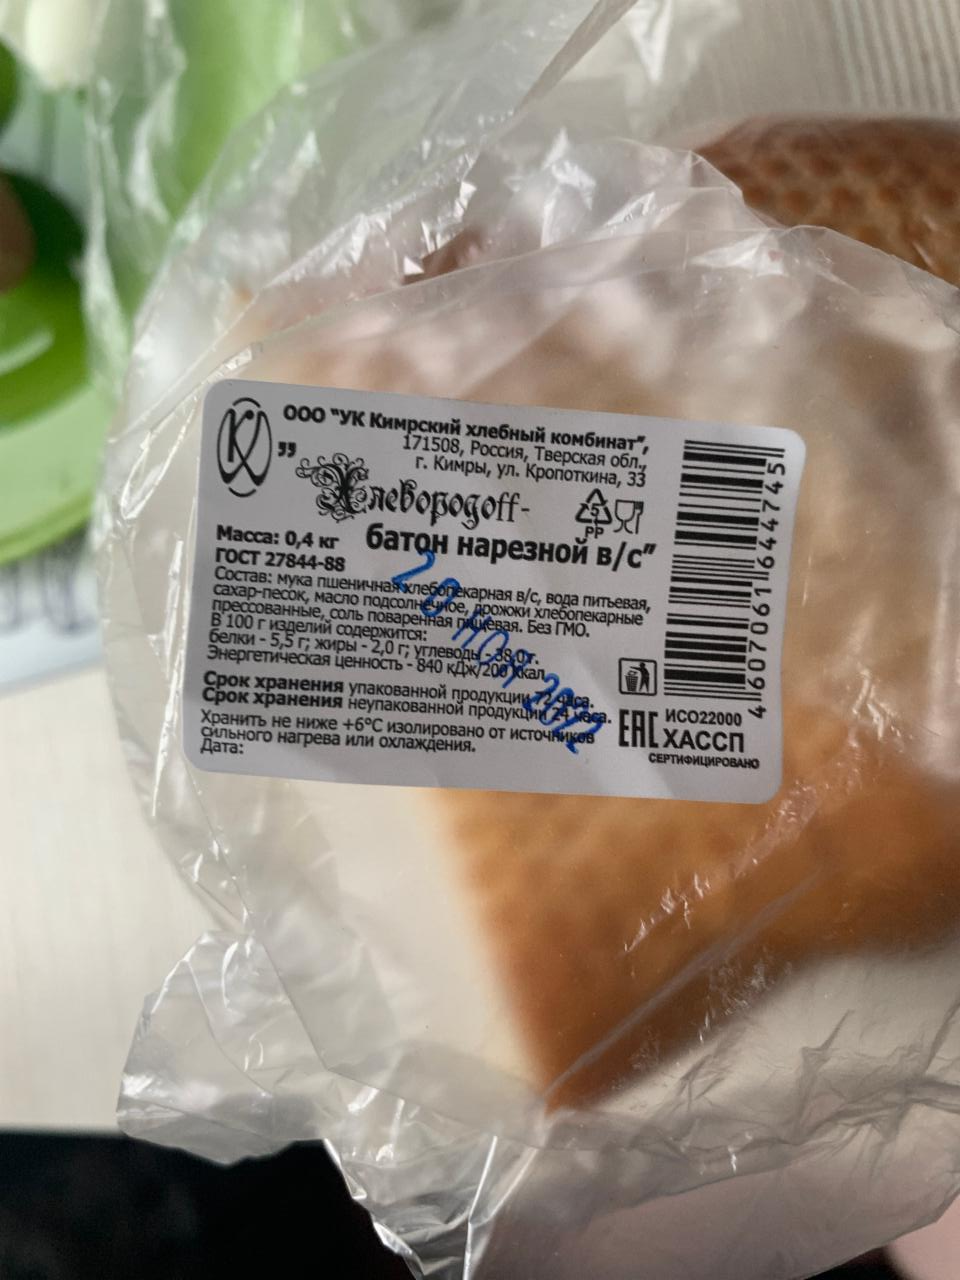 Фото - Батон нарезной Кимрский хлебный комбинат